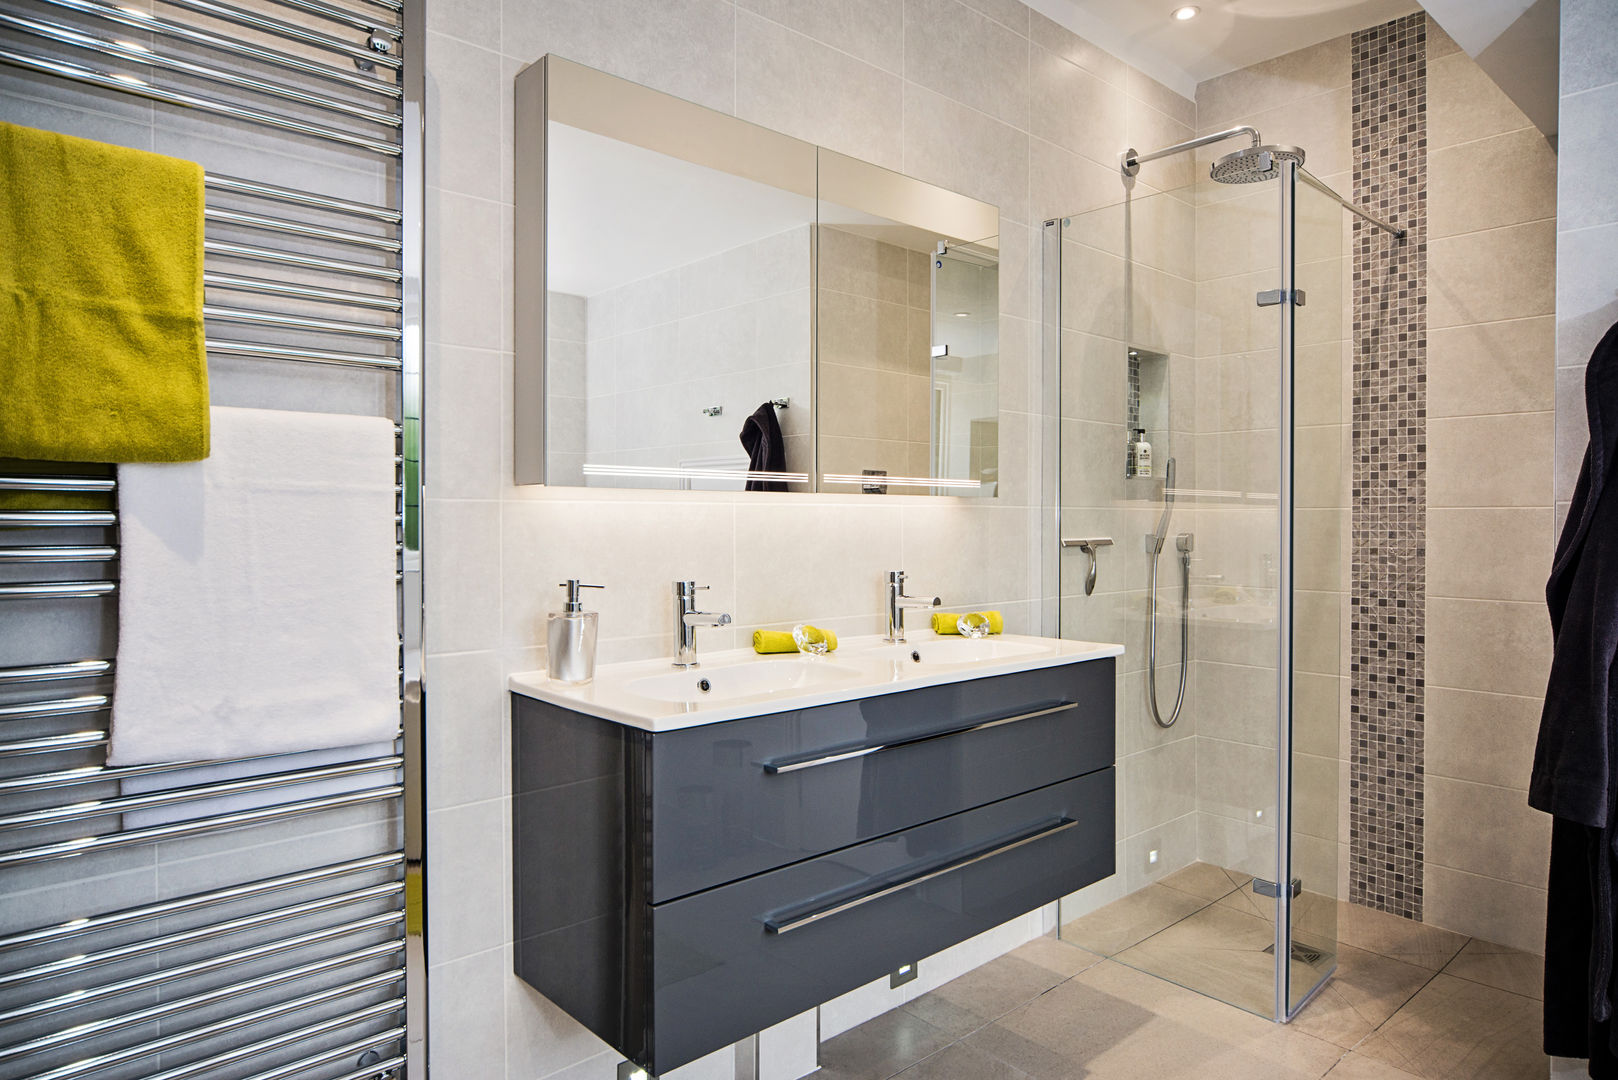 Mr & Mrs D, En-Suite, Guildford Raycross Interiors Kamar Mandi Modern bathroom design,installation,mosaic tiles,walk-in shower,free-standing bath,mirror cabinet